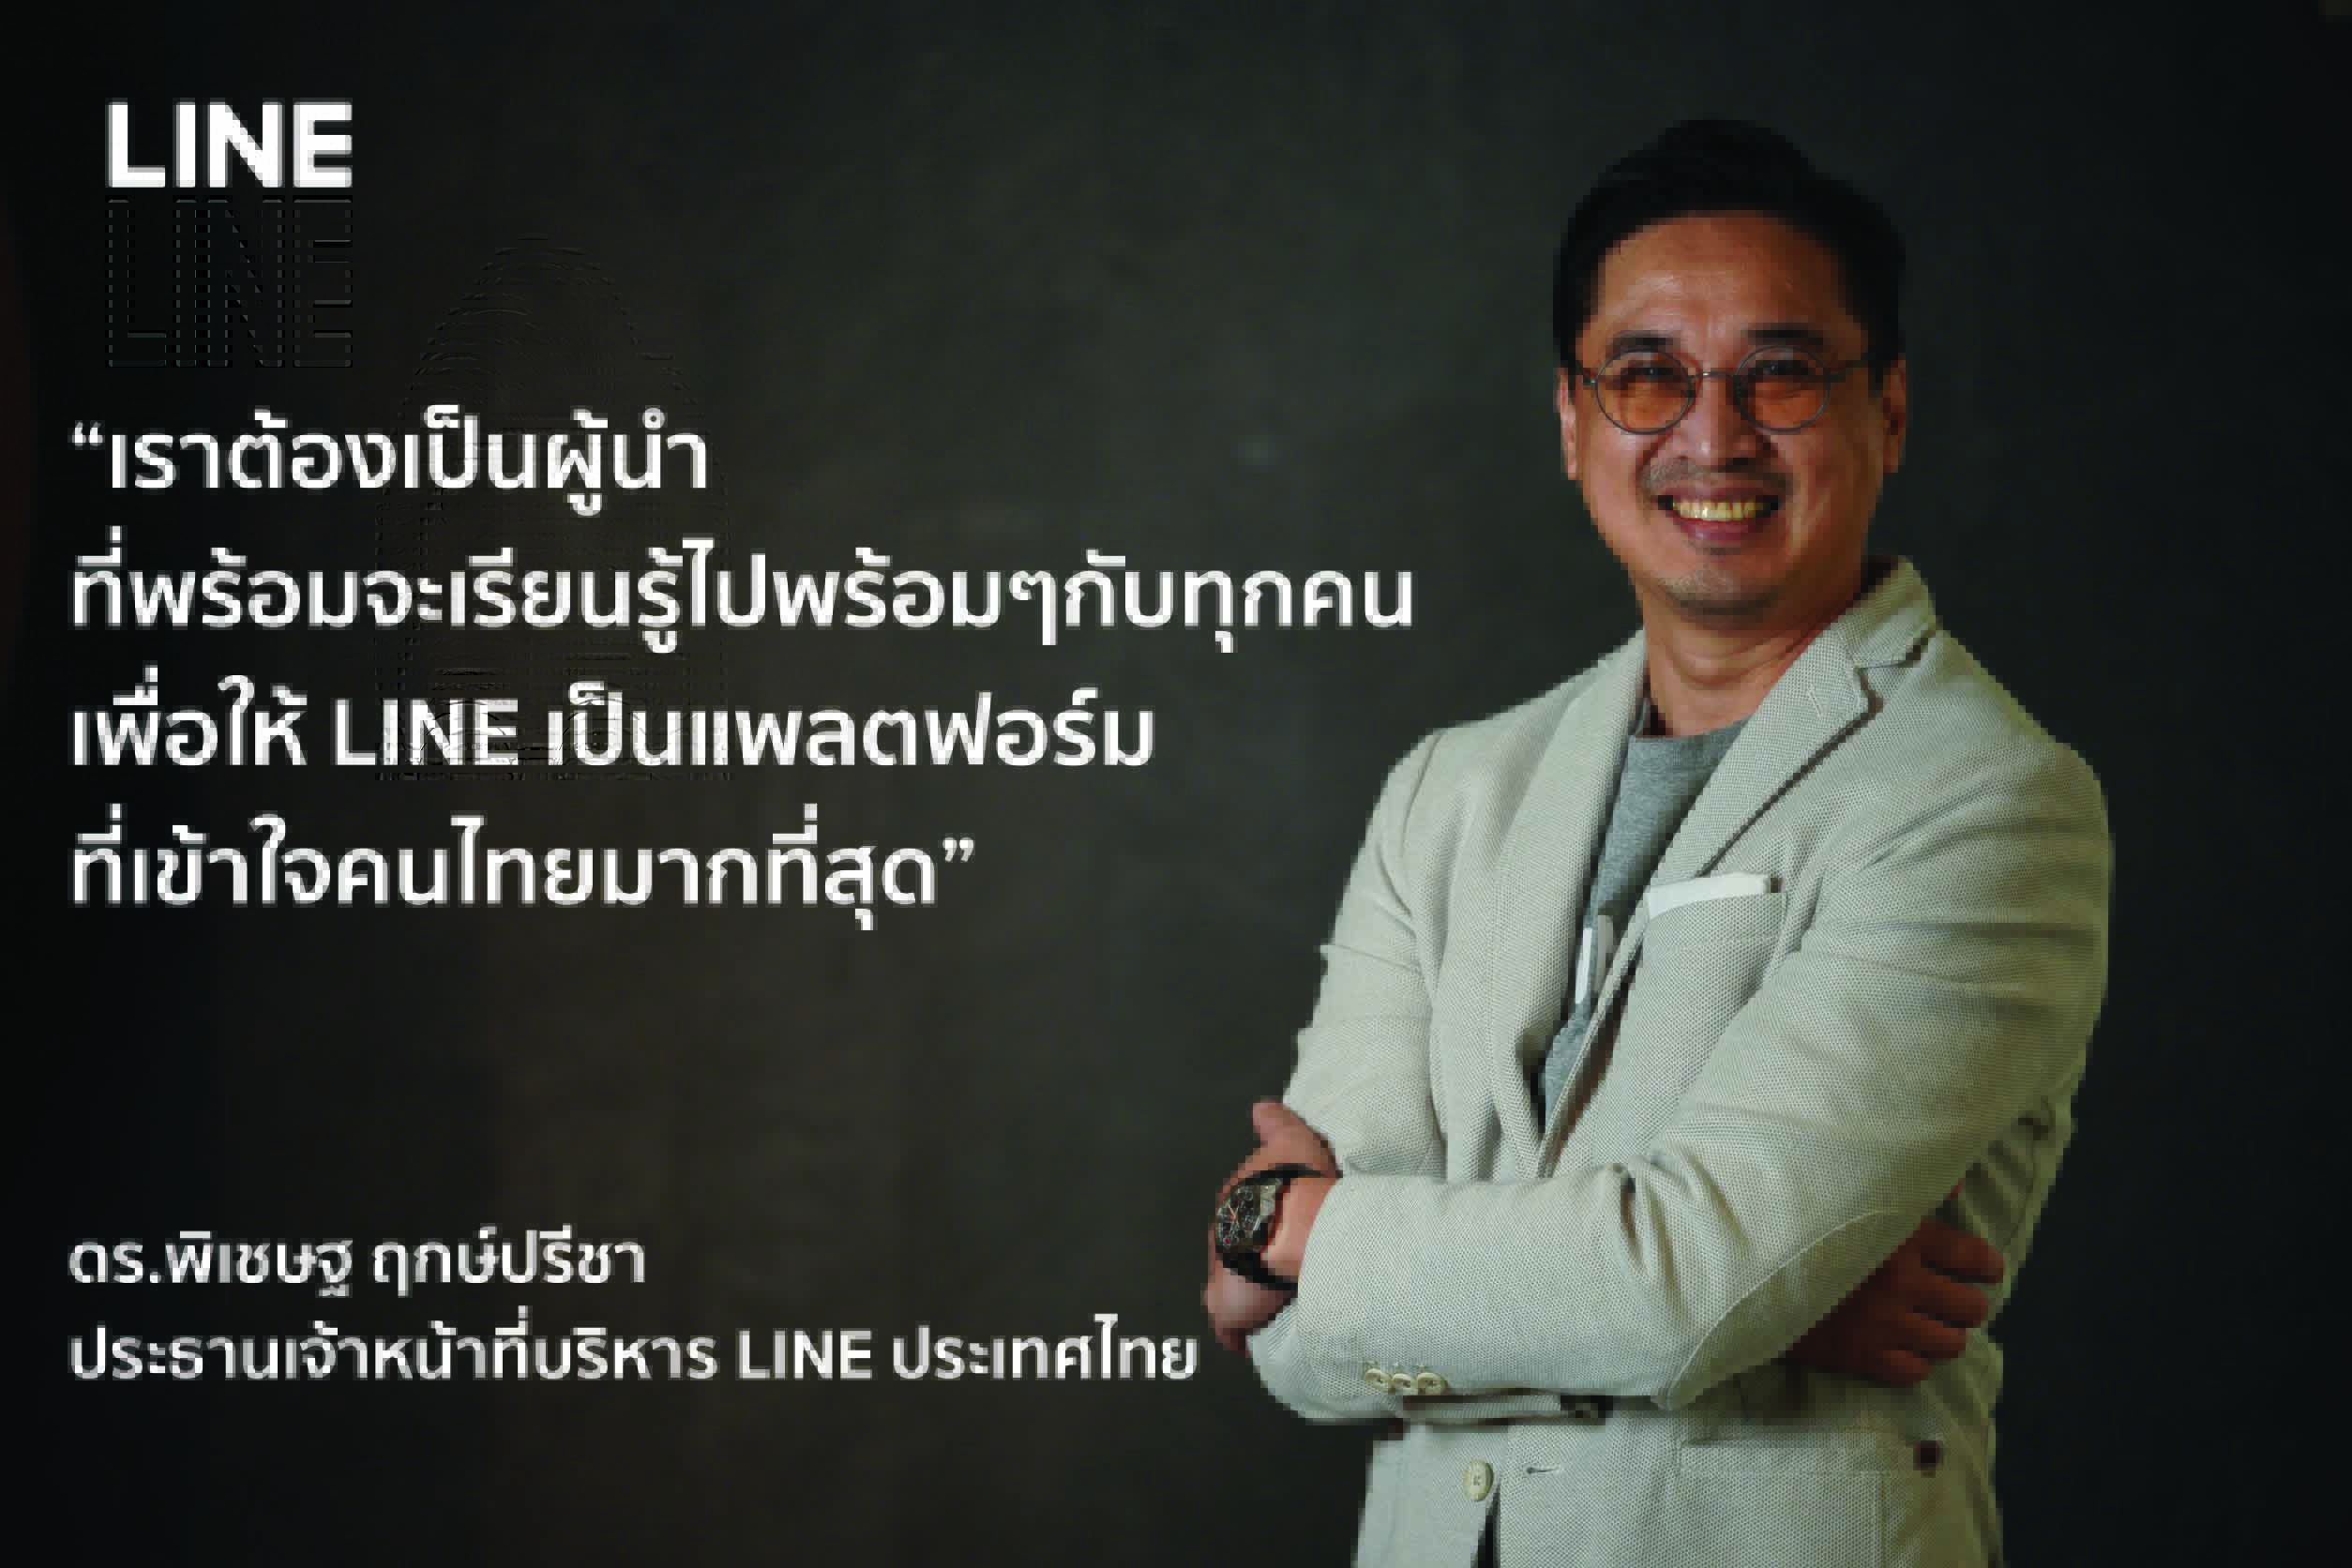 LINE ประเทศไทย ตอกย้ำแพลตฟอร์มที่ใช่สำหรับ New Normal Lifestyle ของคนไทย